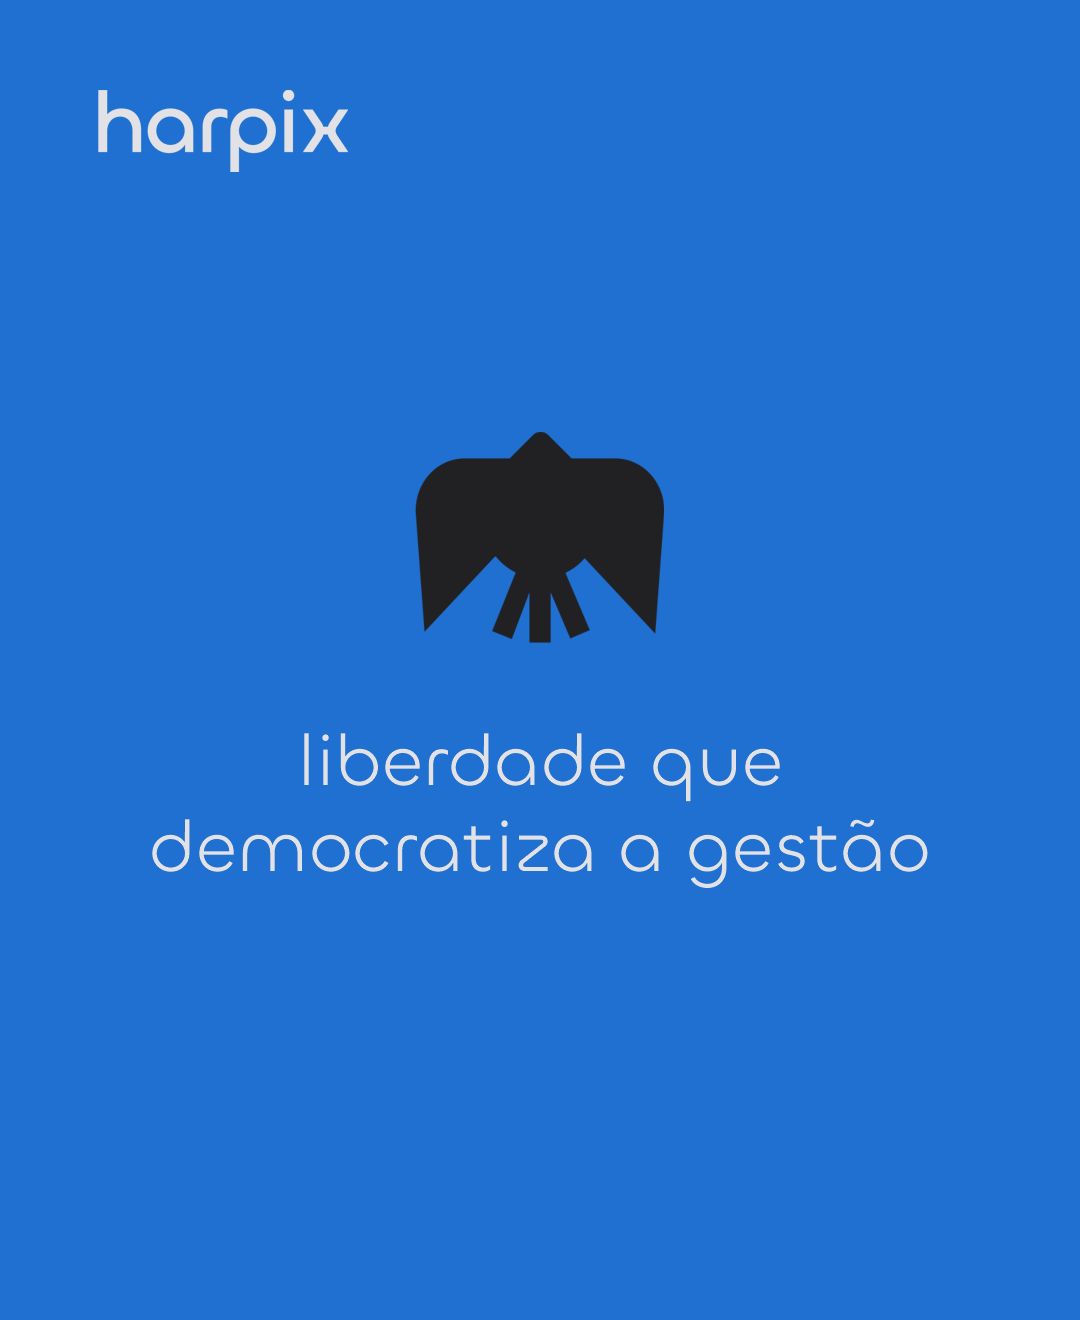 Harpix, liberdade que democratiza a gestão